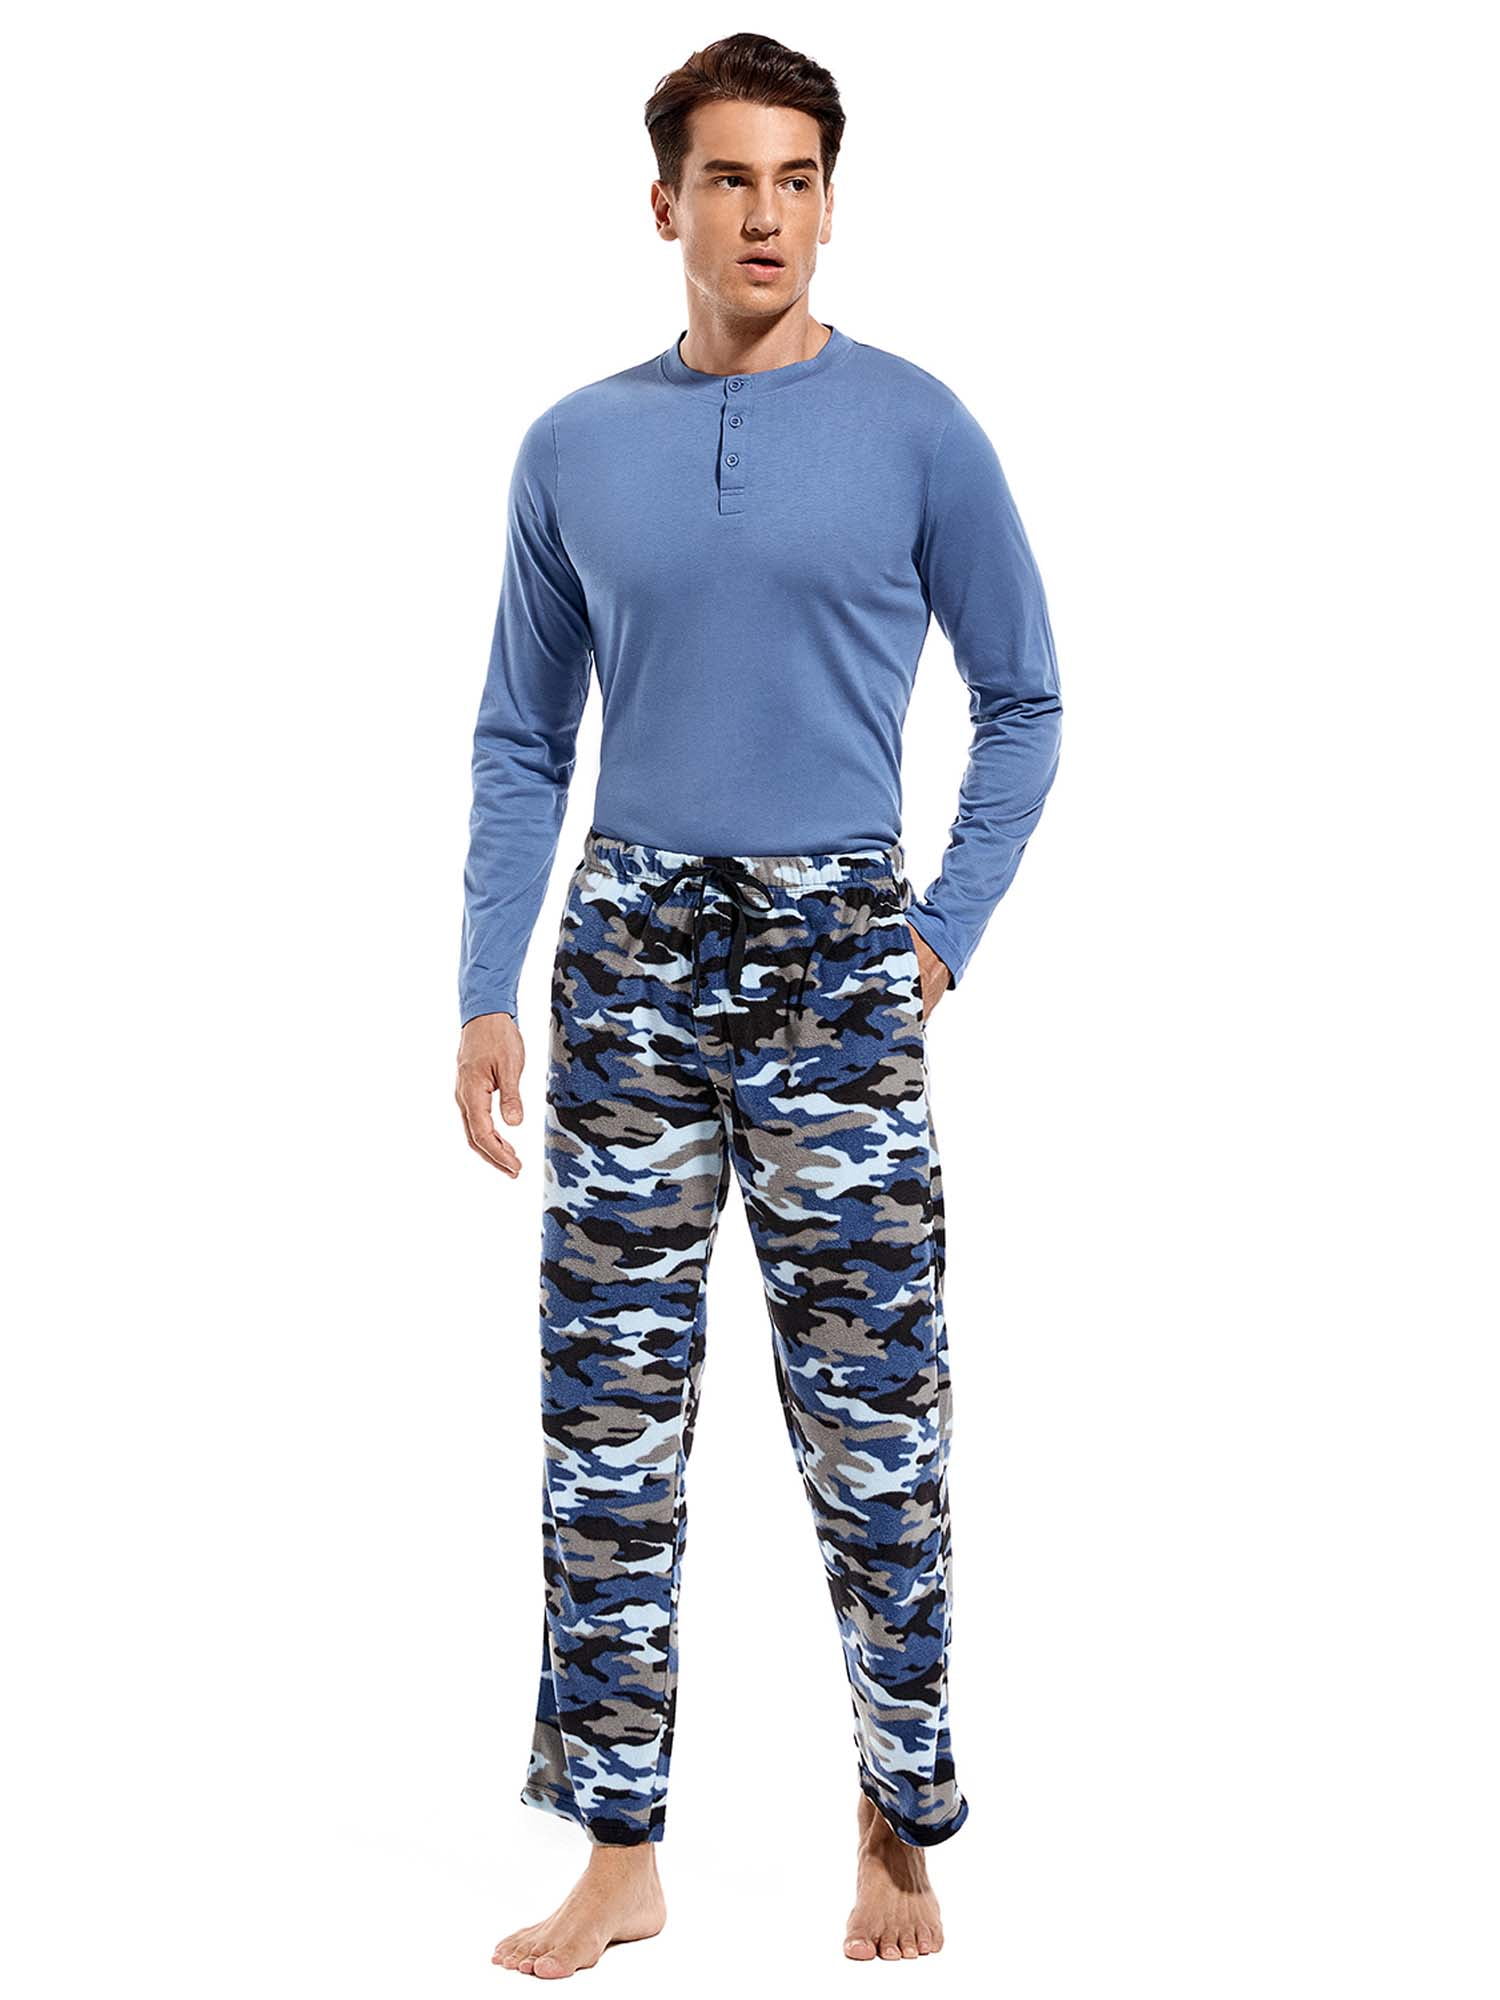 allbrand365 designer Mens Brinkley Plaid Pajamas,Brinkley Plaid,Large